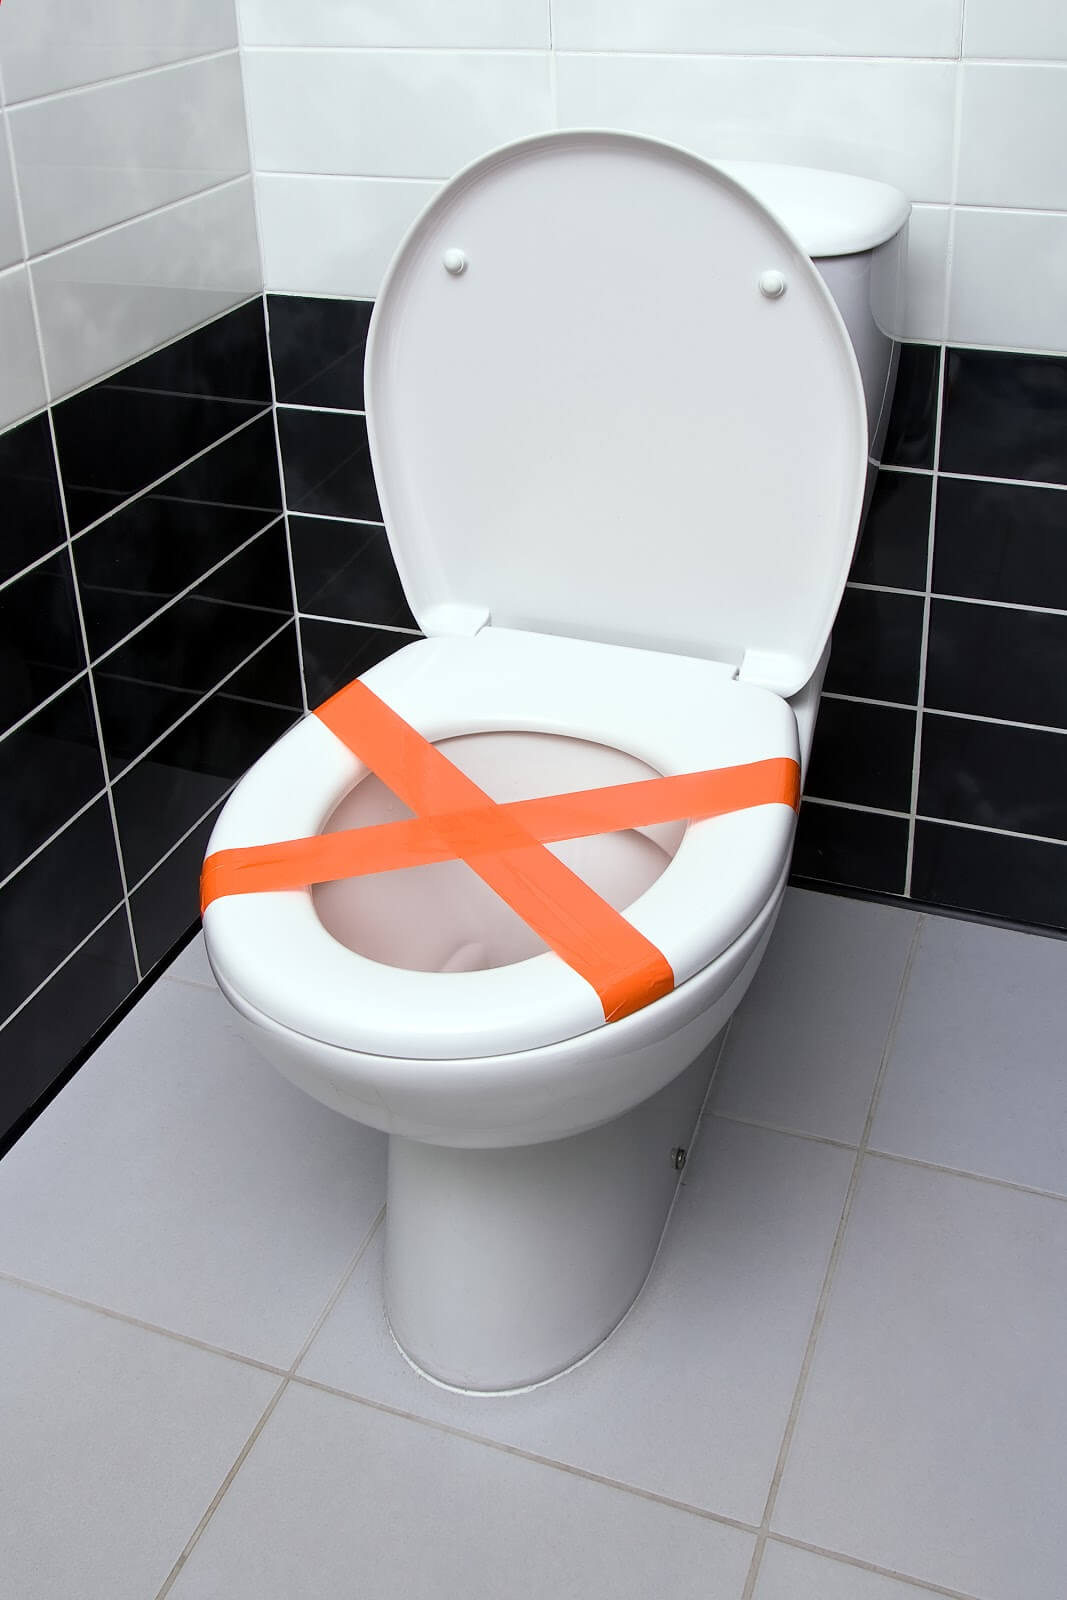 Taped-off-toilet.jpg